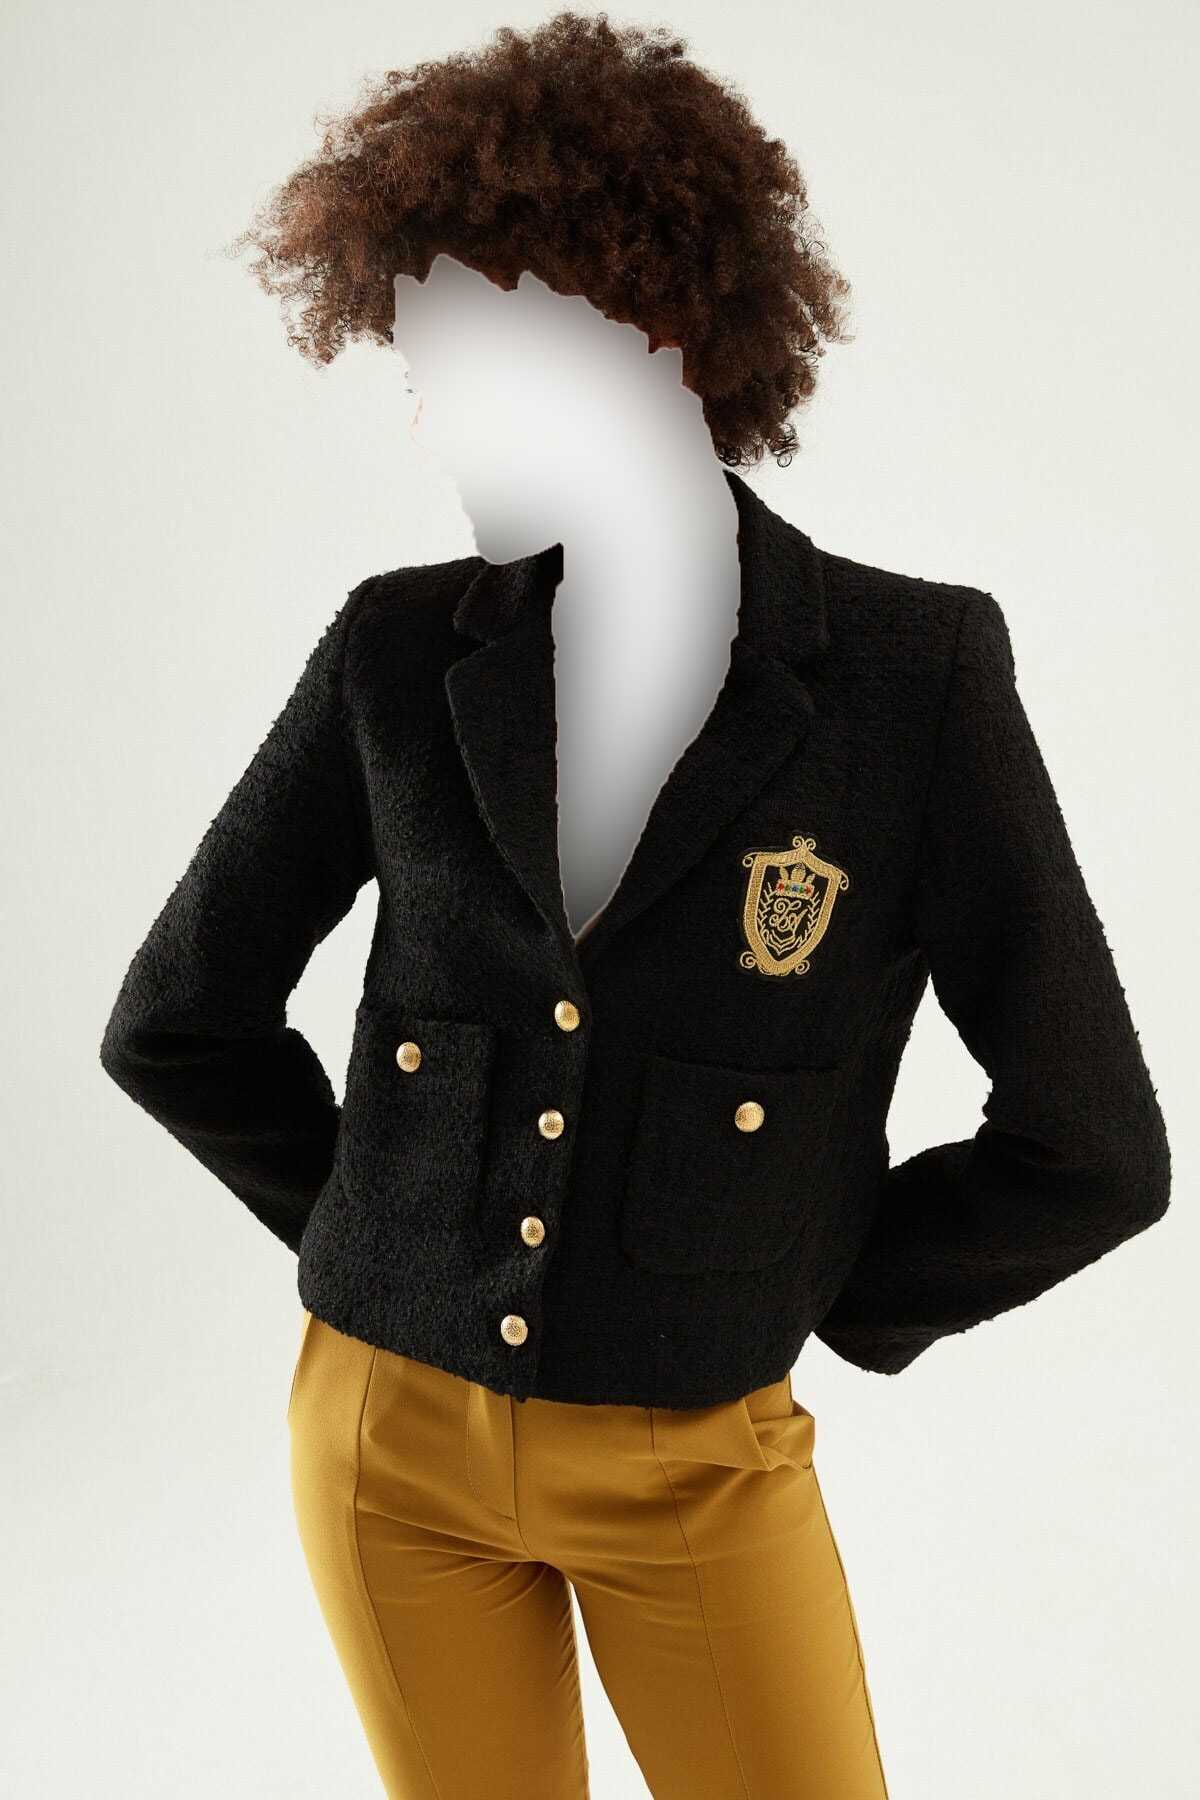 ژاکت زنانه خاص برند Quzu رنگ مشکی کد ty144387042